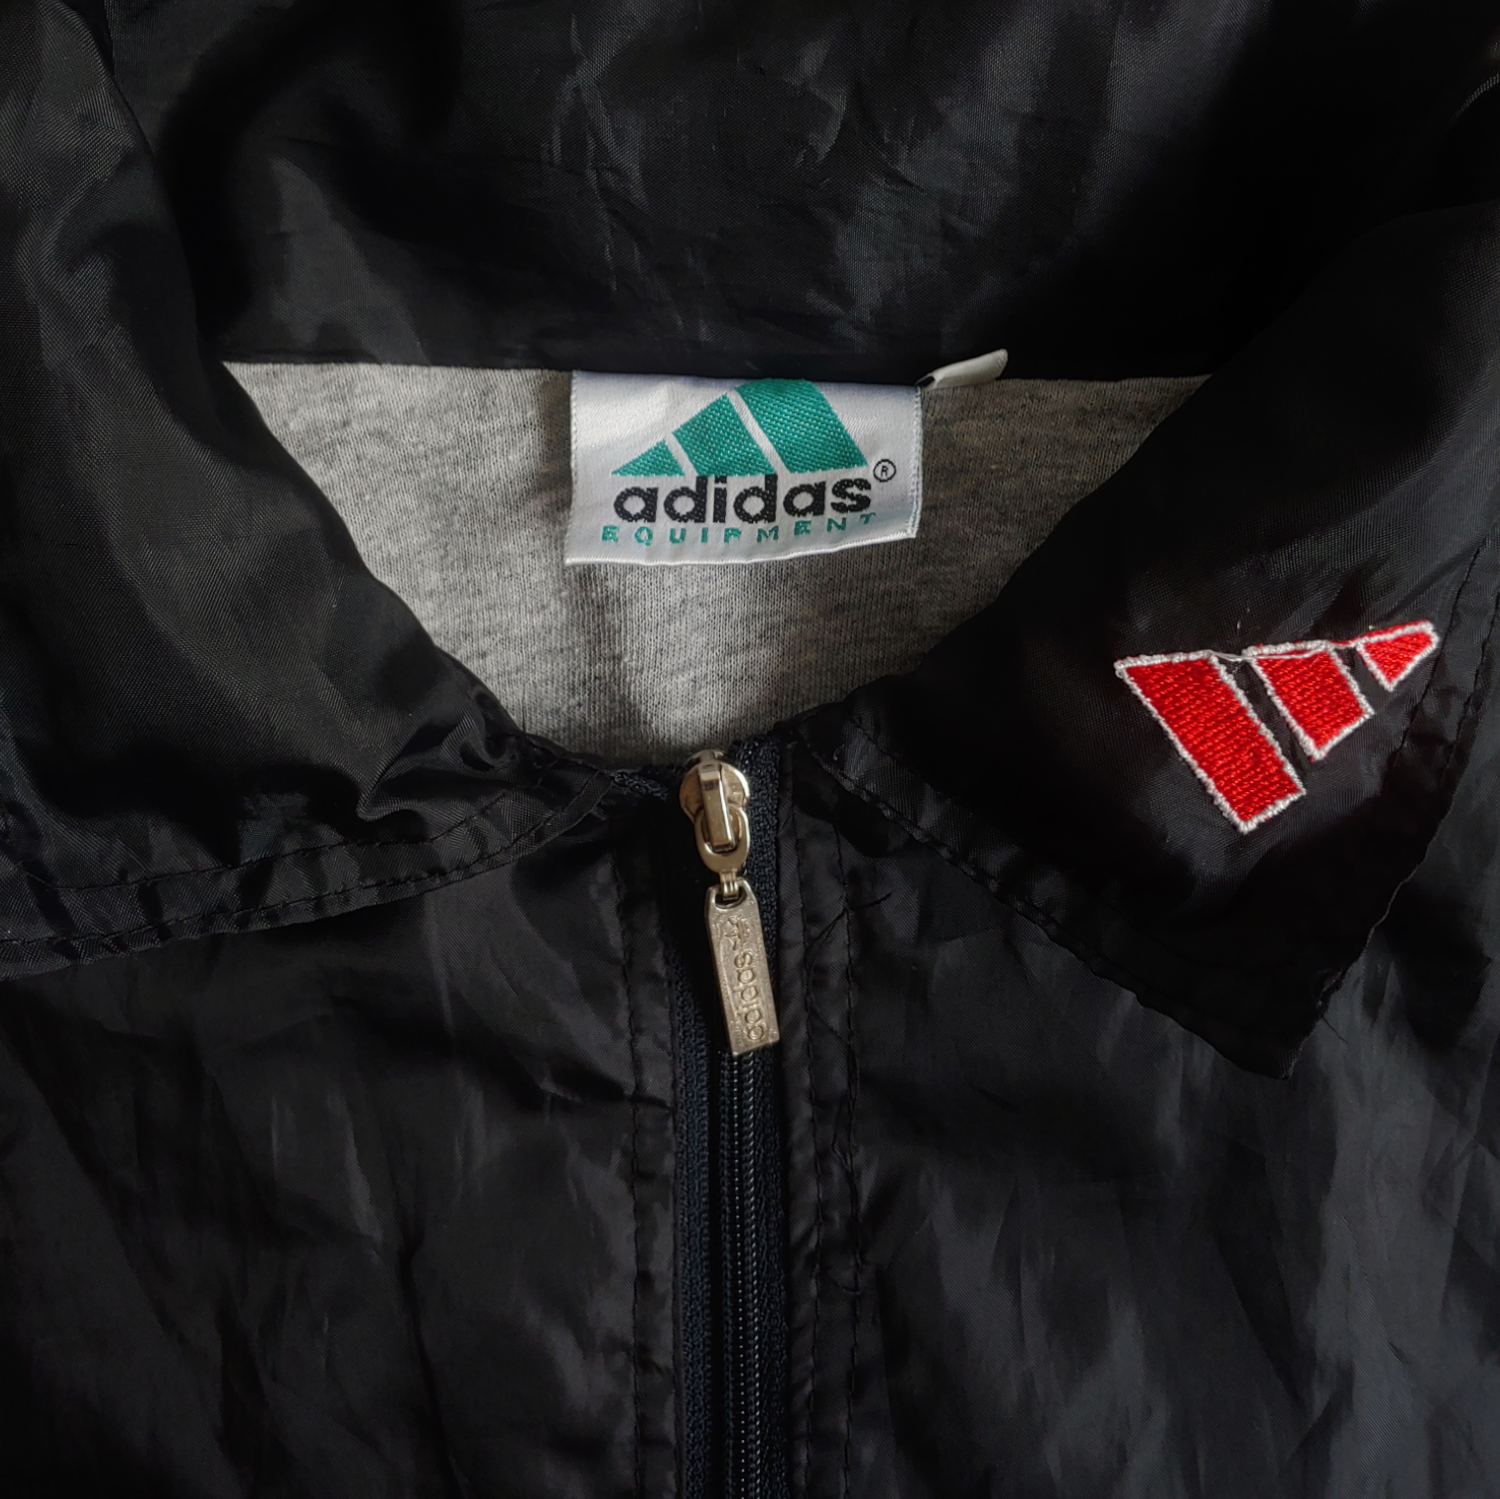 Vintage 90s Adidas Equipment Black Track Jacket Label - Casspios Dream